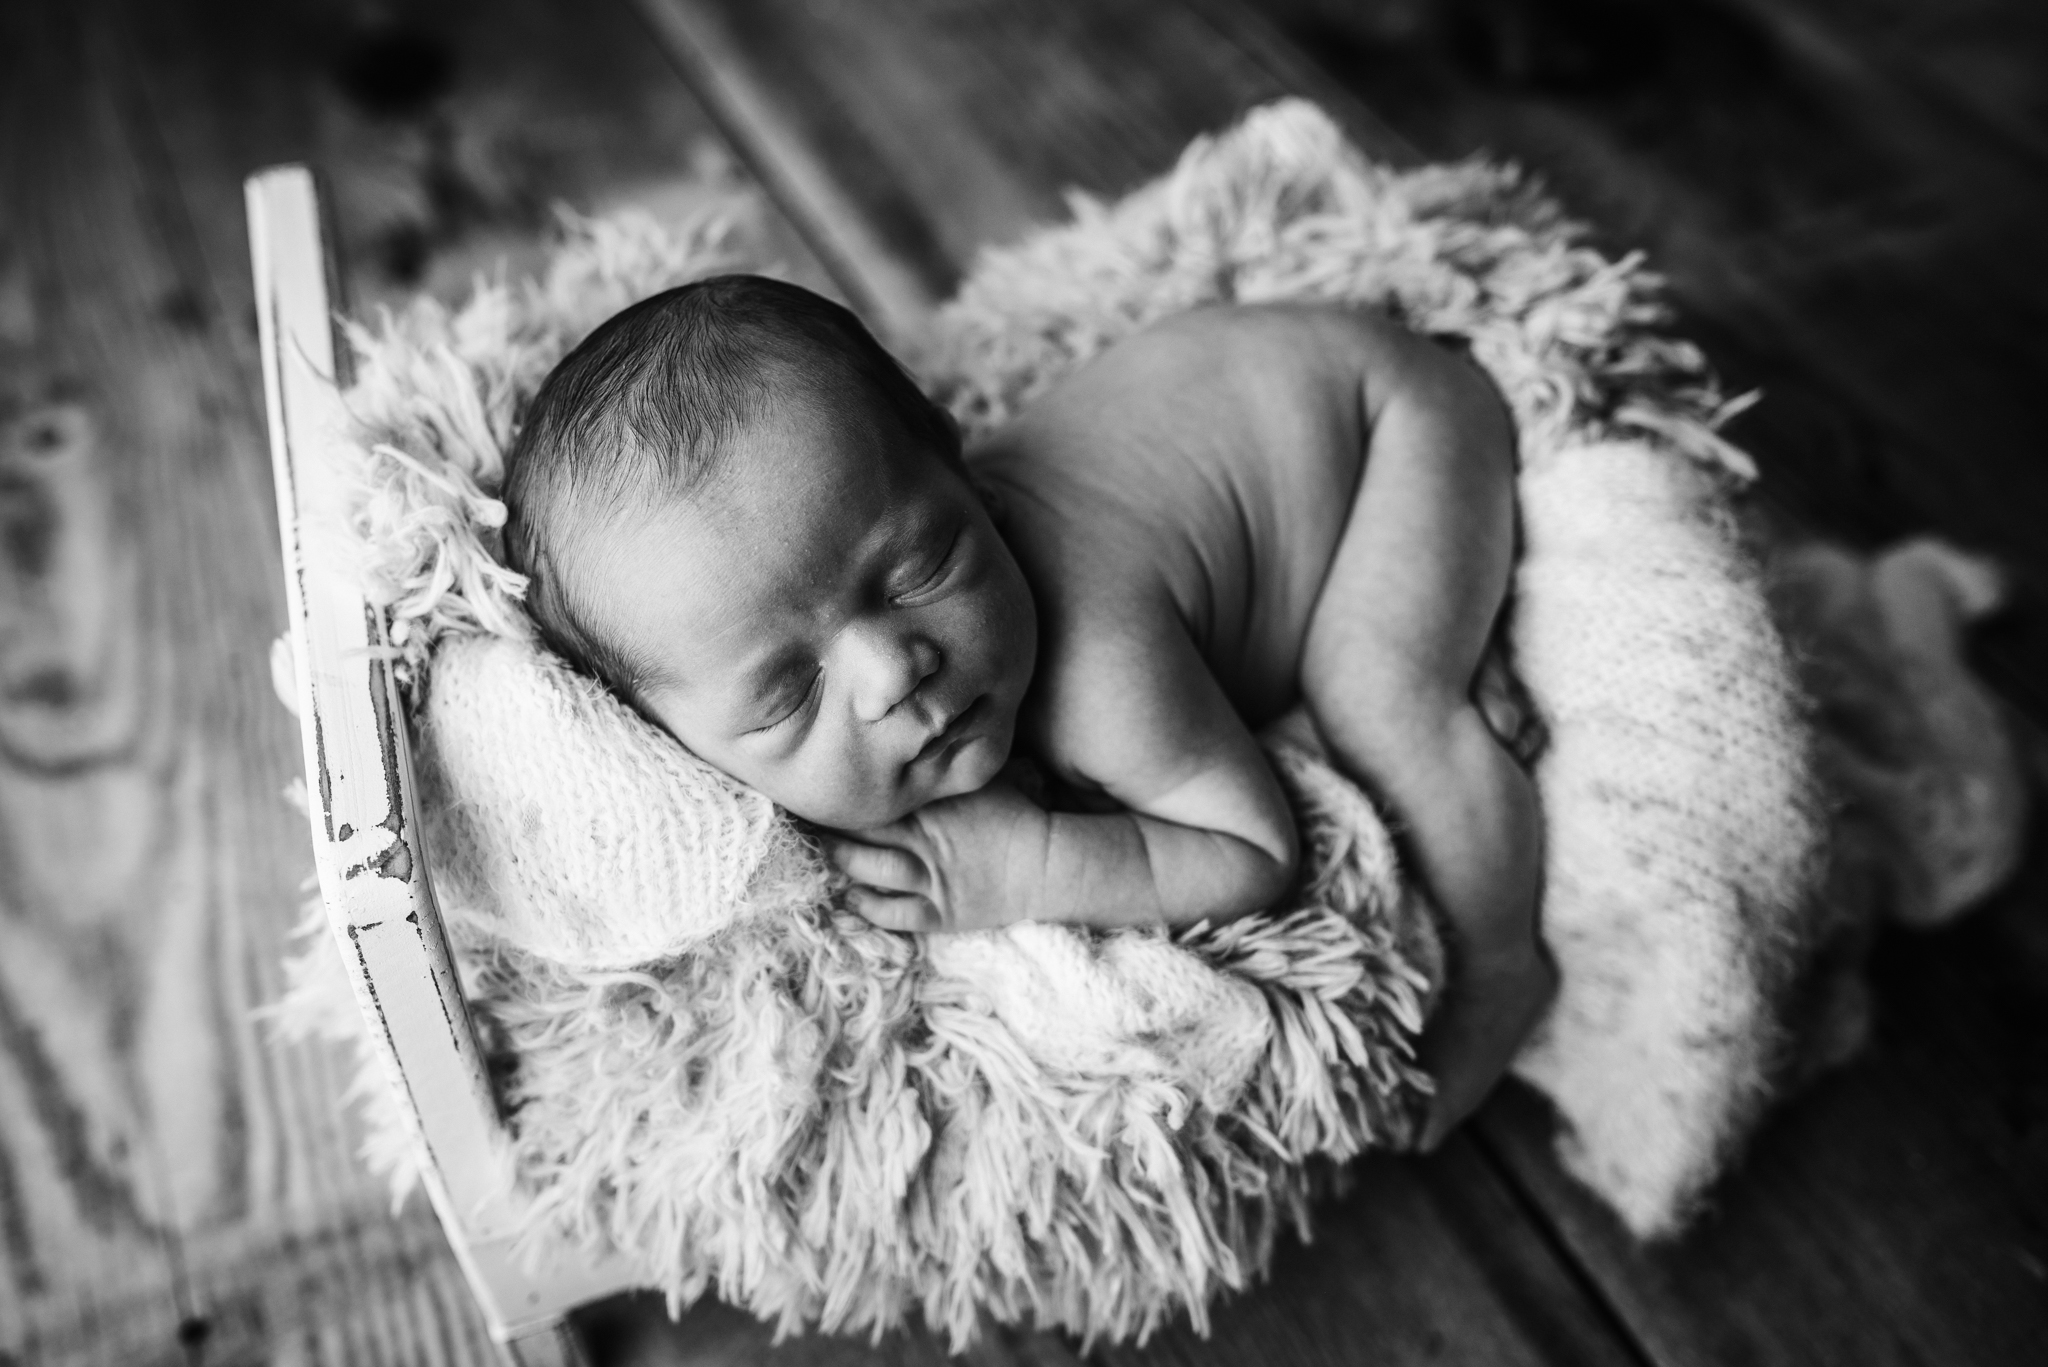 newborn photography portland oregon